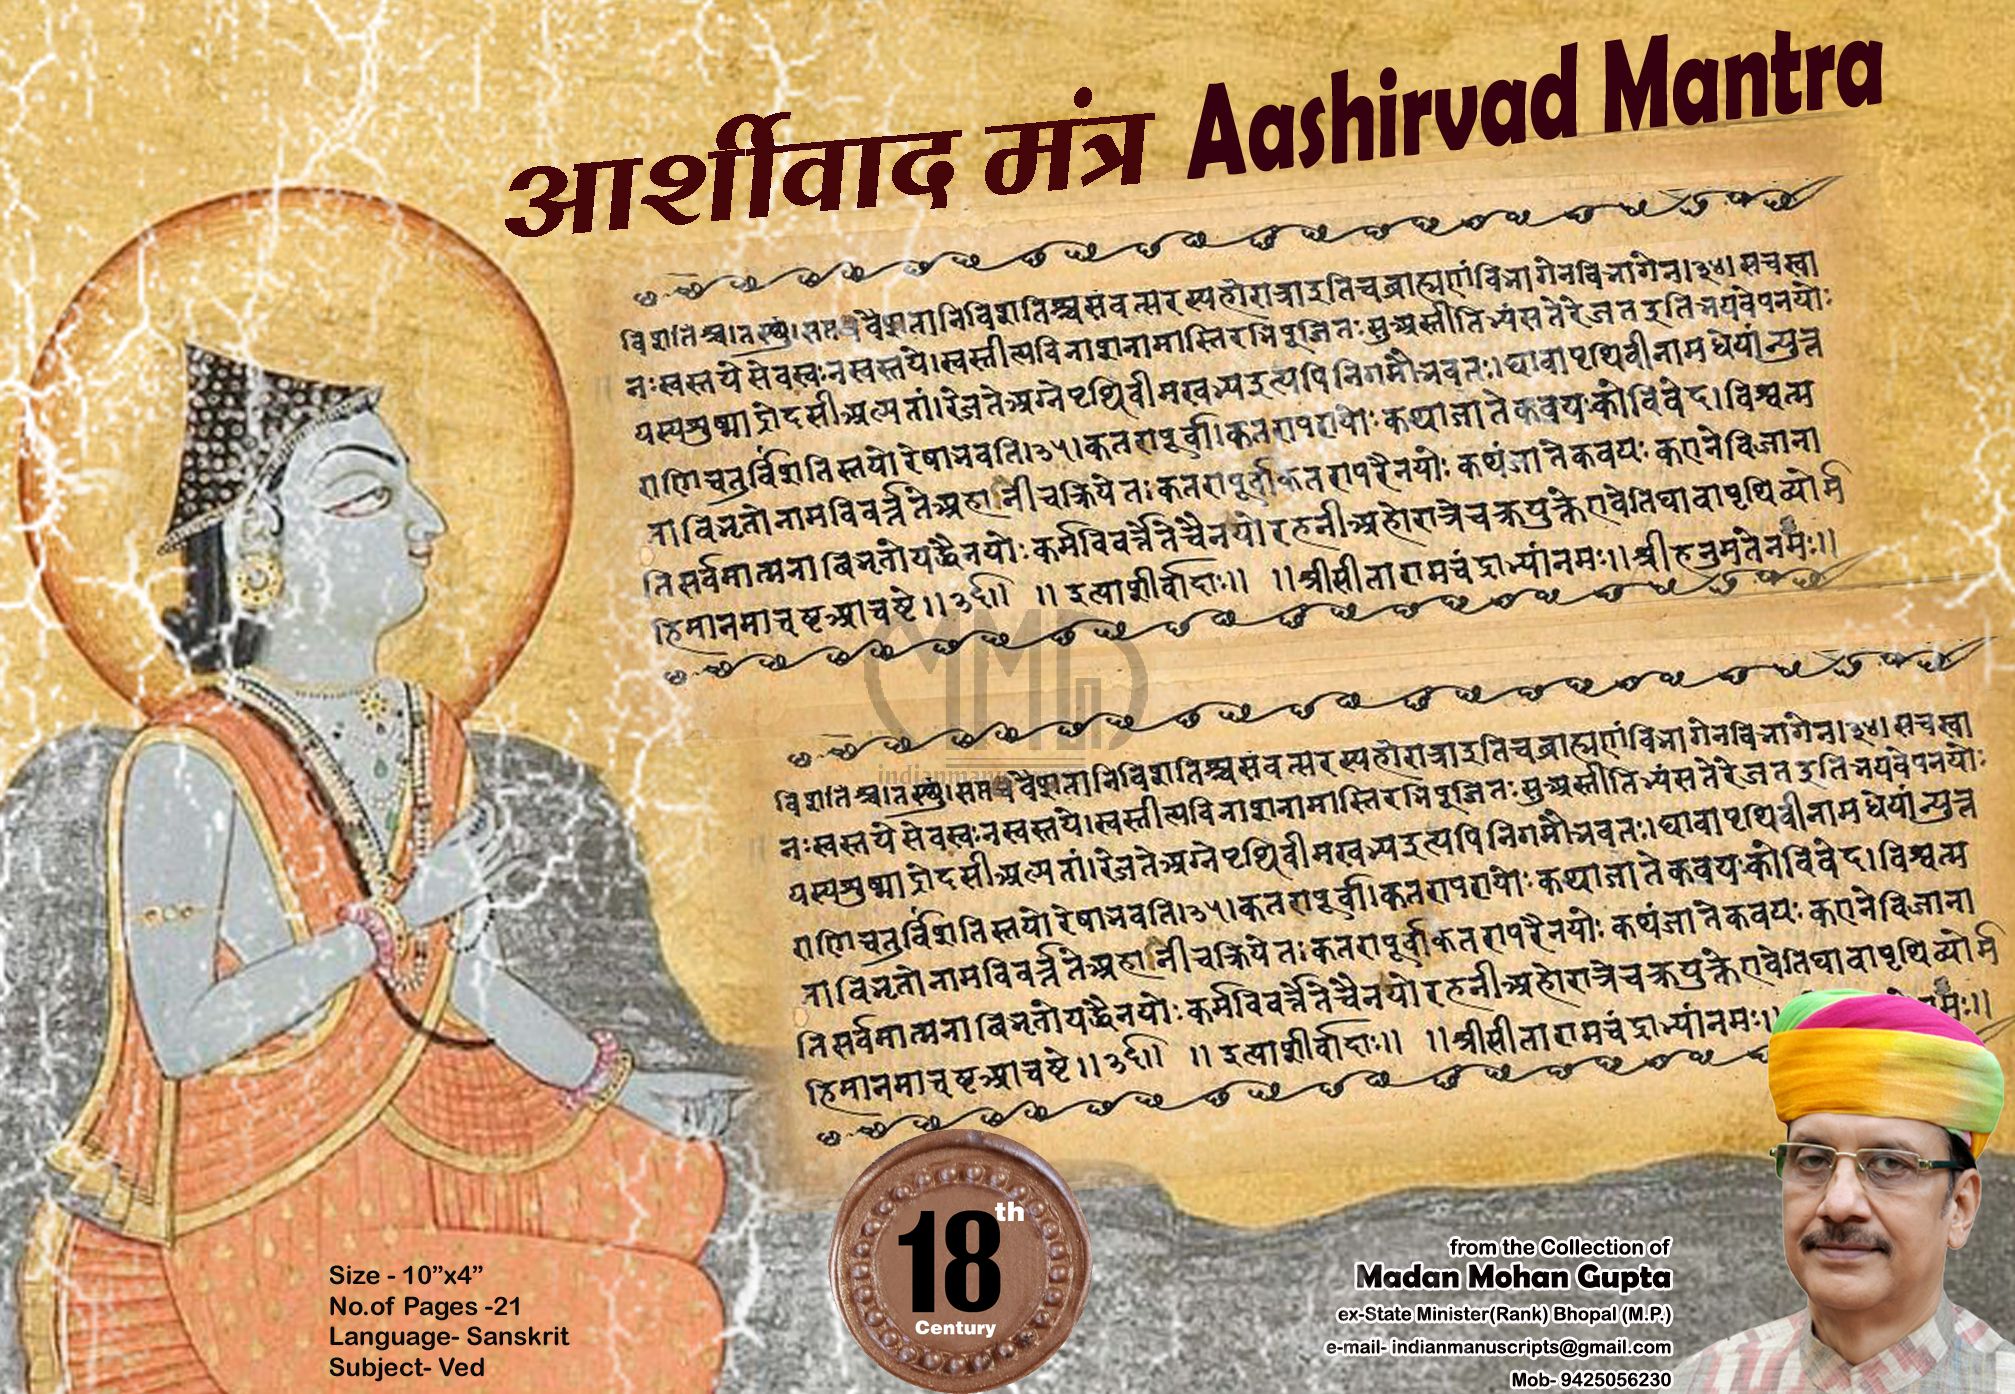 Ashirvad Mantra